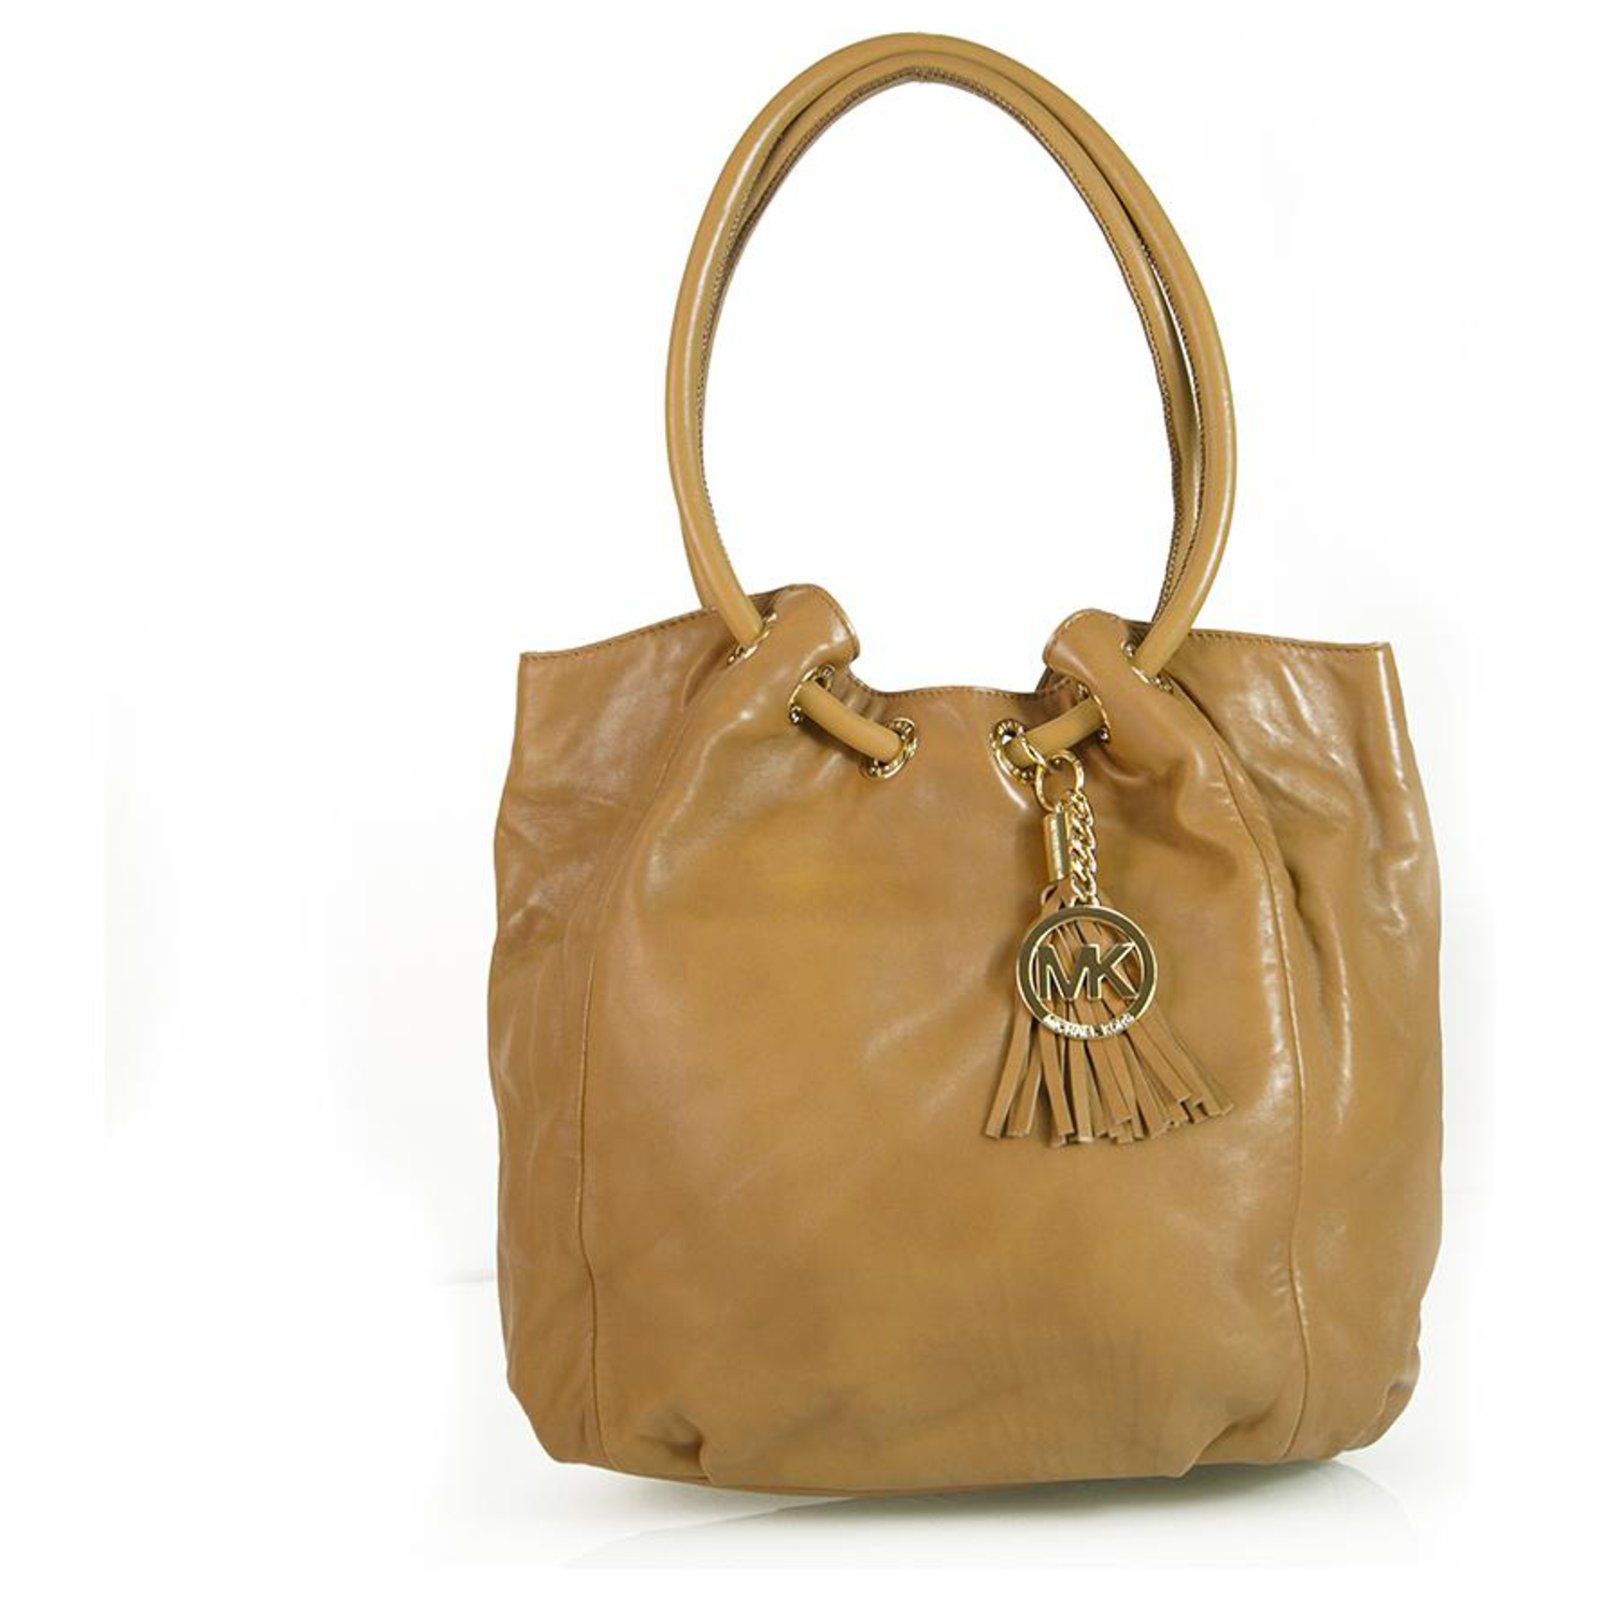 Michael Kors  Bags  Michael Kors Handbag Converts To Shoulder Bag   Poshmark